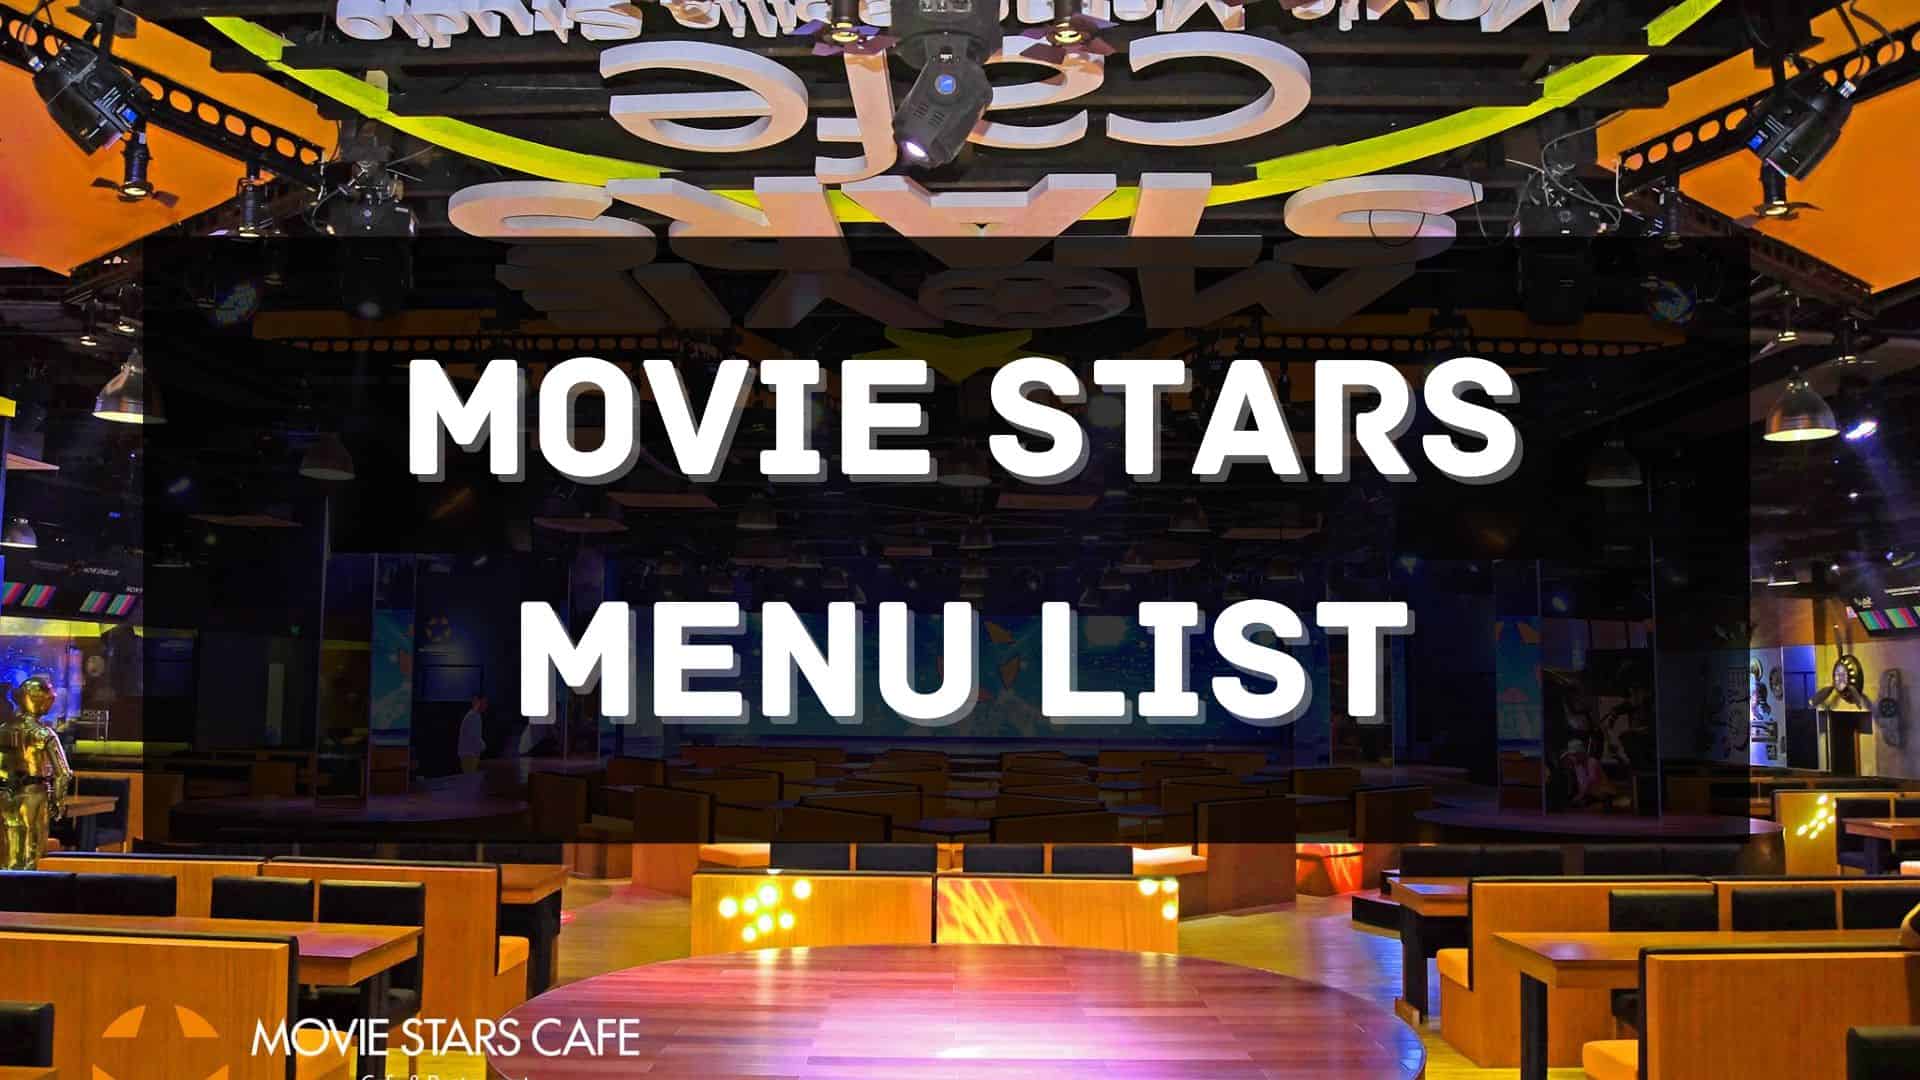 Move stars menu prices philippines